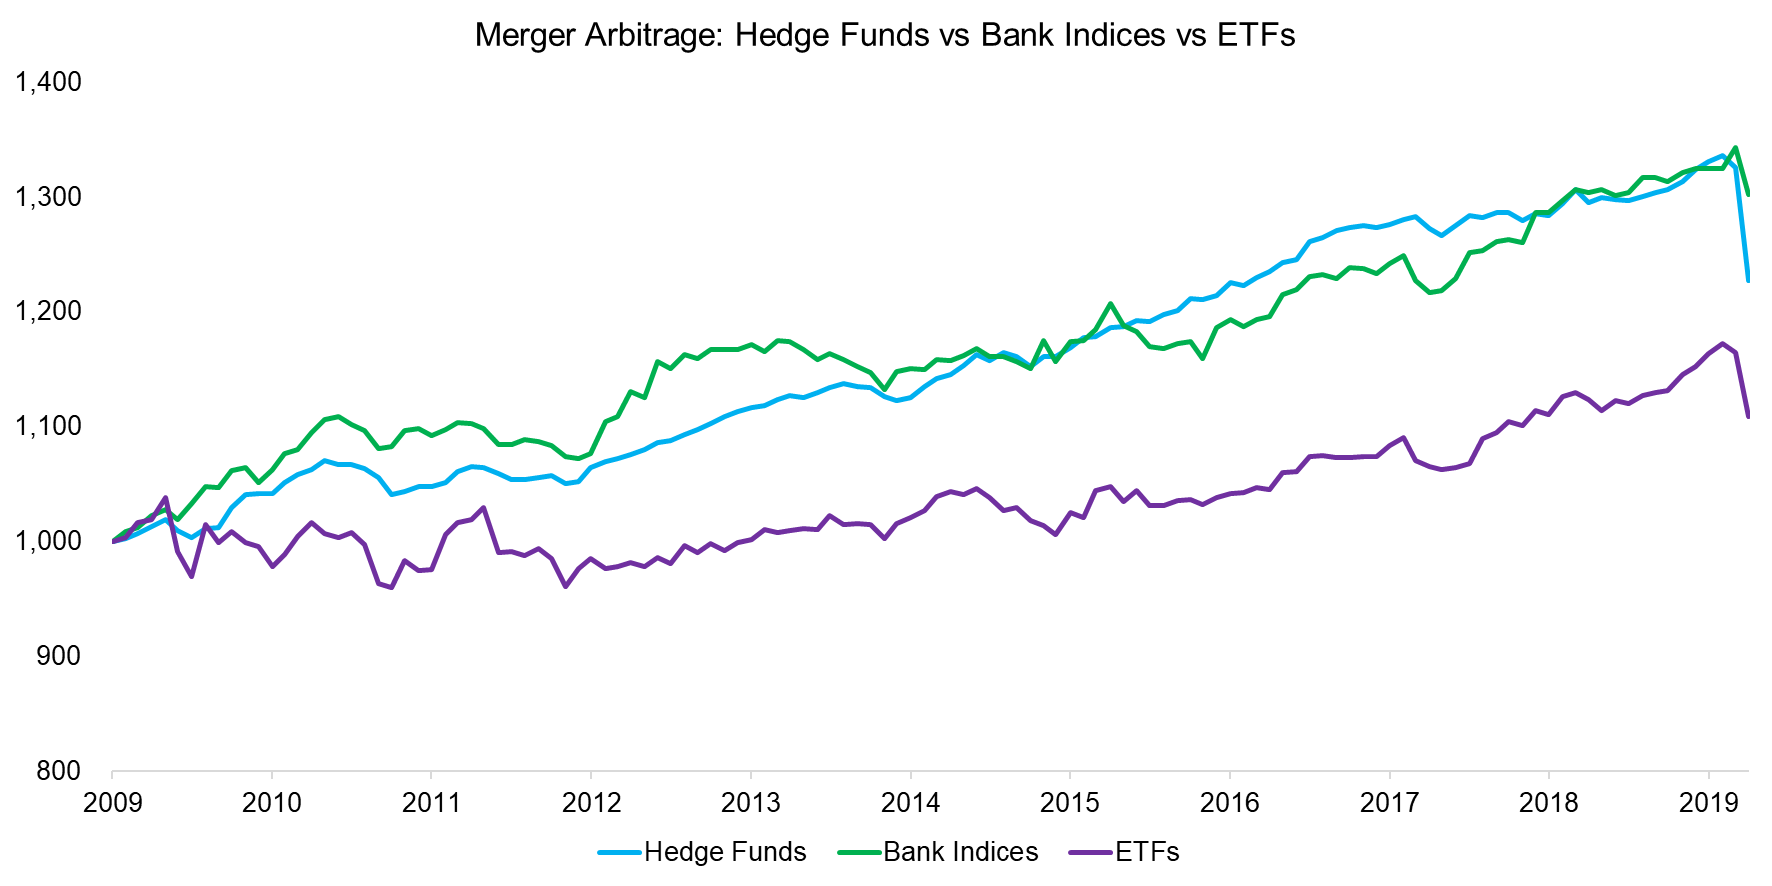 Merger Arbitrage Hedge Funds vs Bank Indices vs ETFs